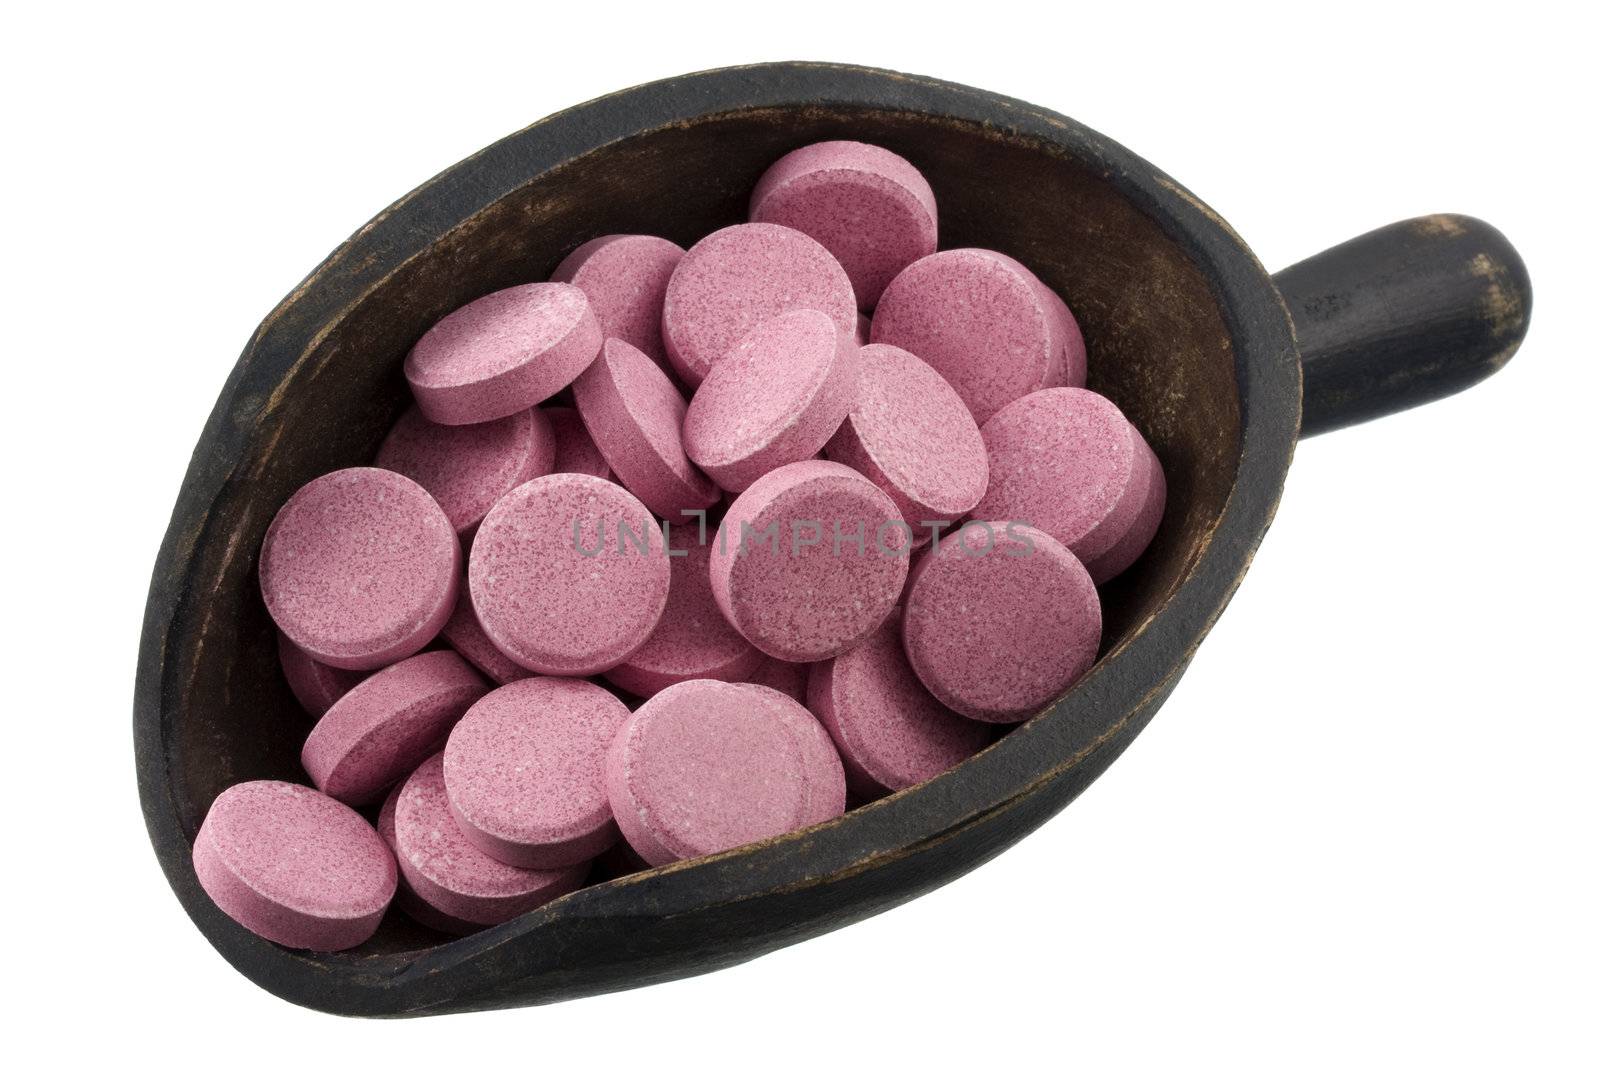 scoop of pink pills (tablets) by PixelsAway